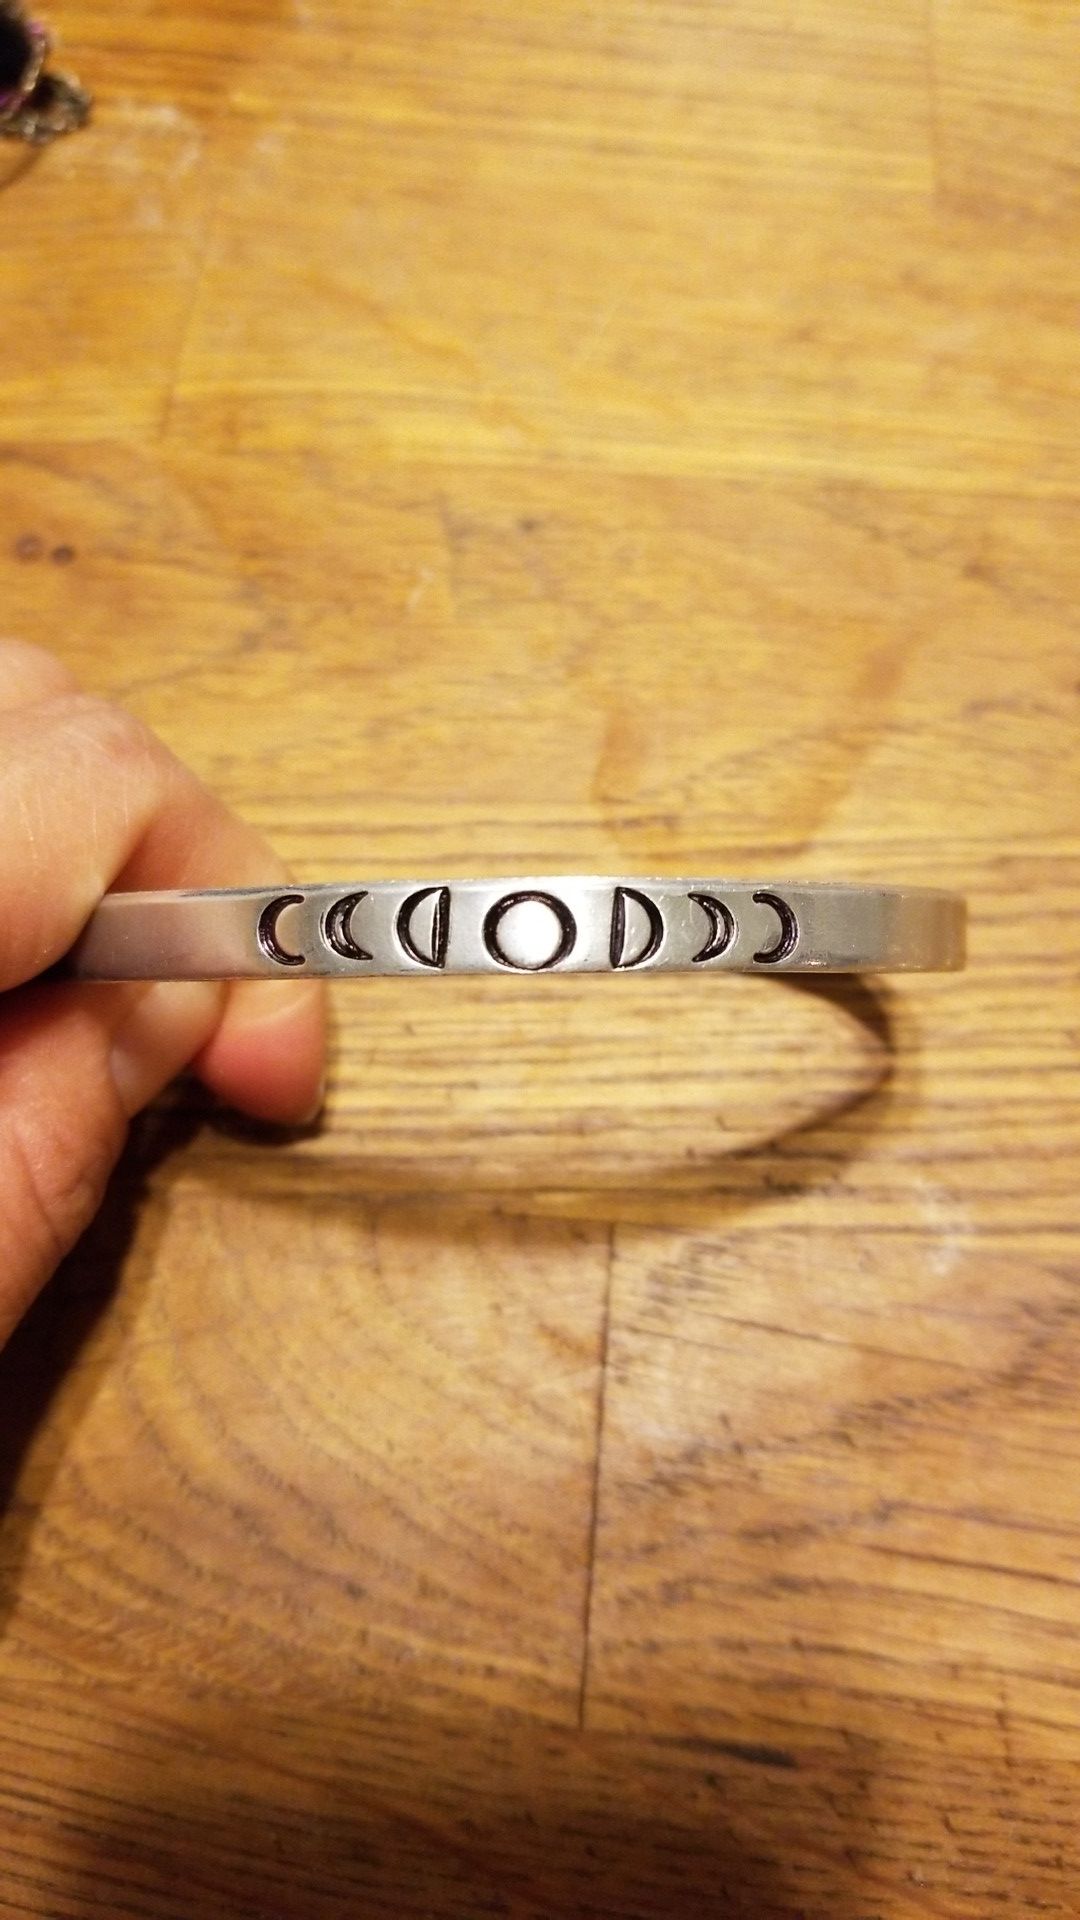 Hand hammered silver moon phase bracelet